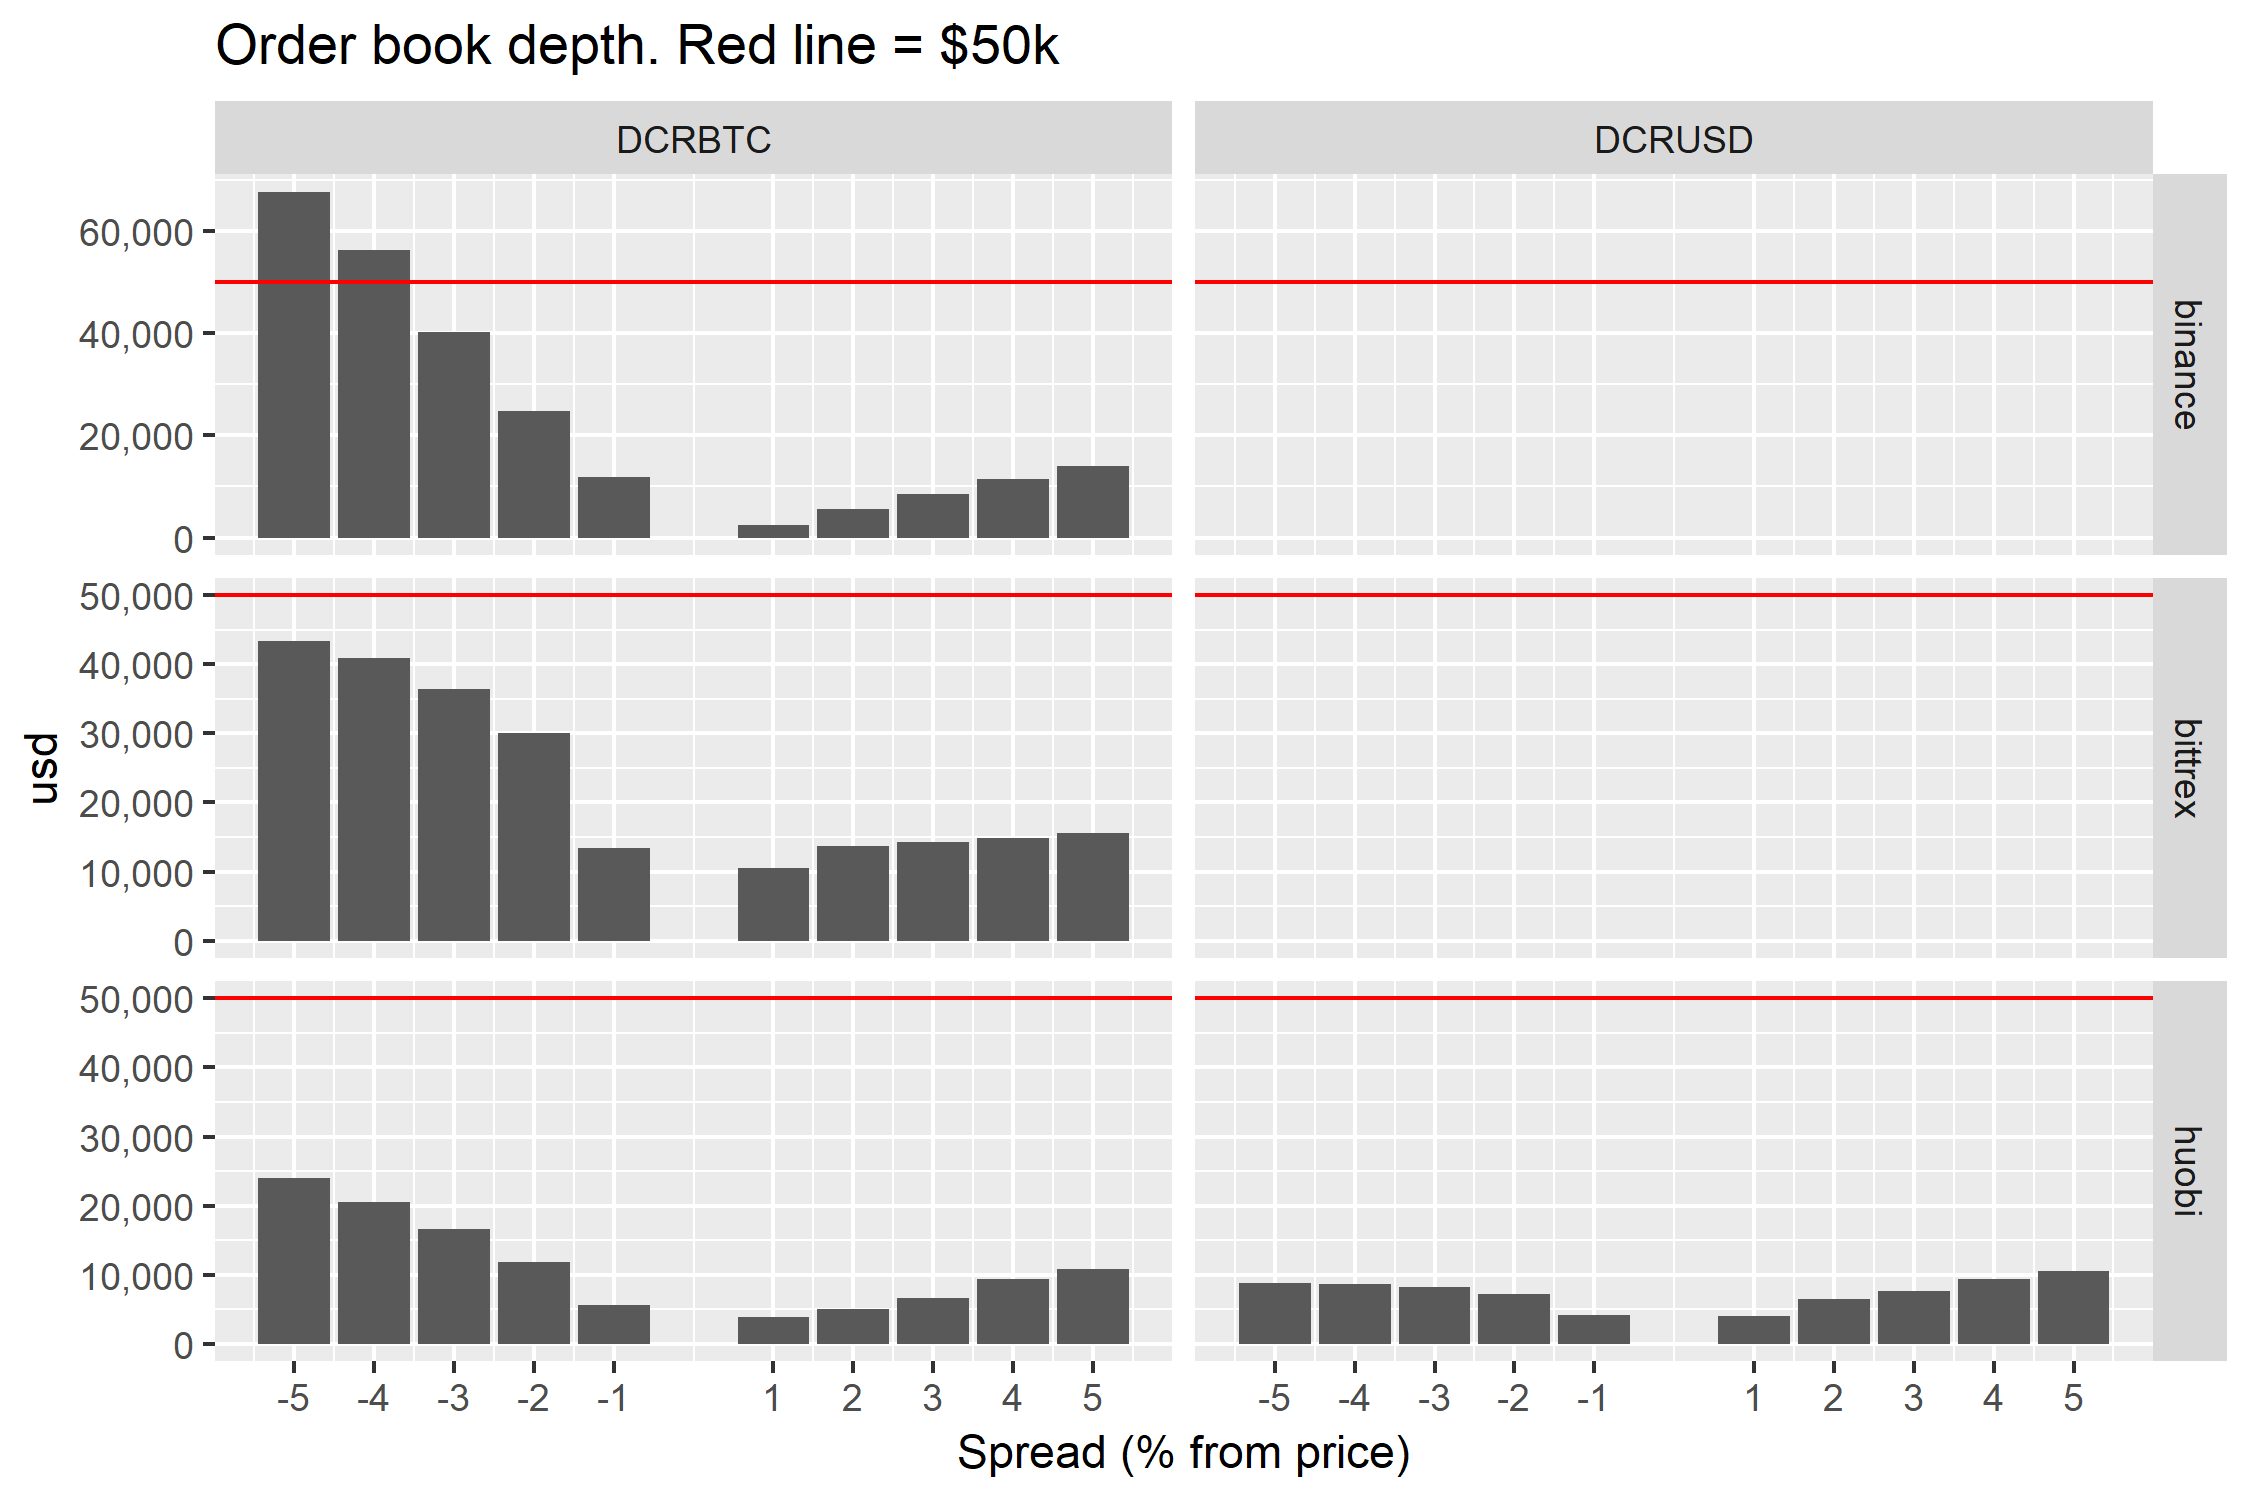 Order book depth for DCR